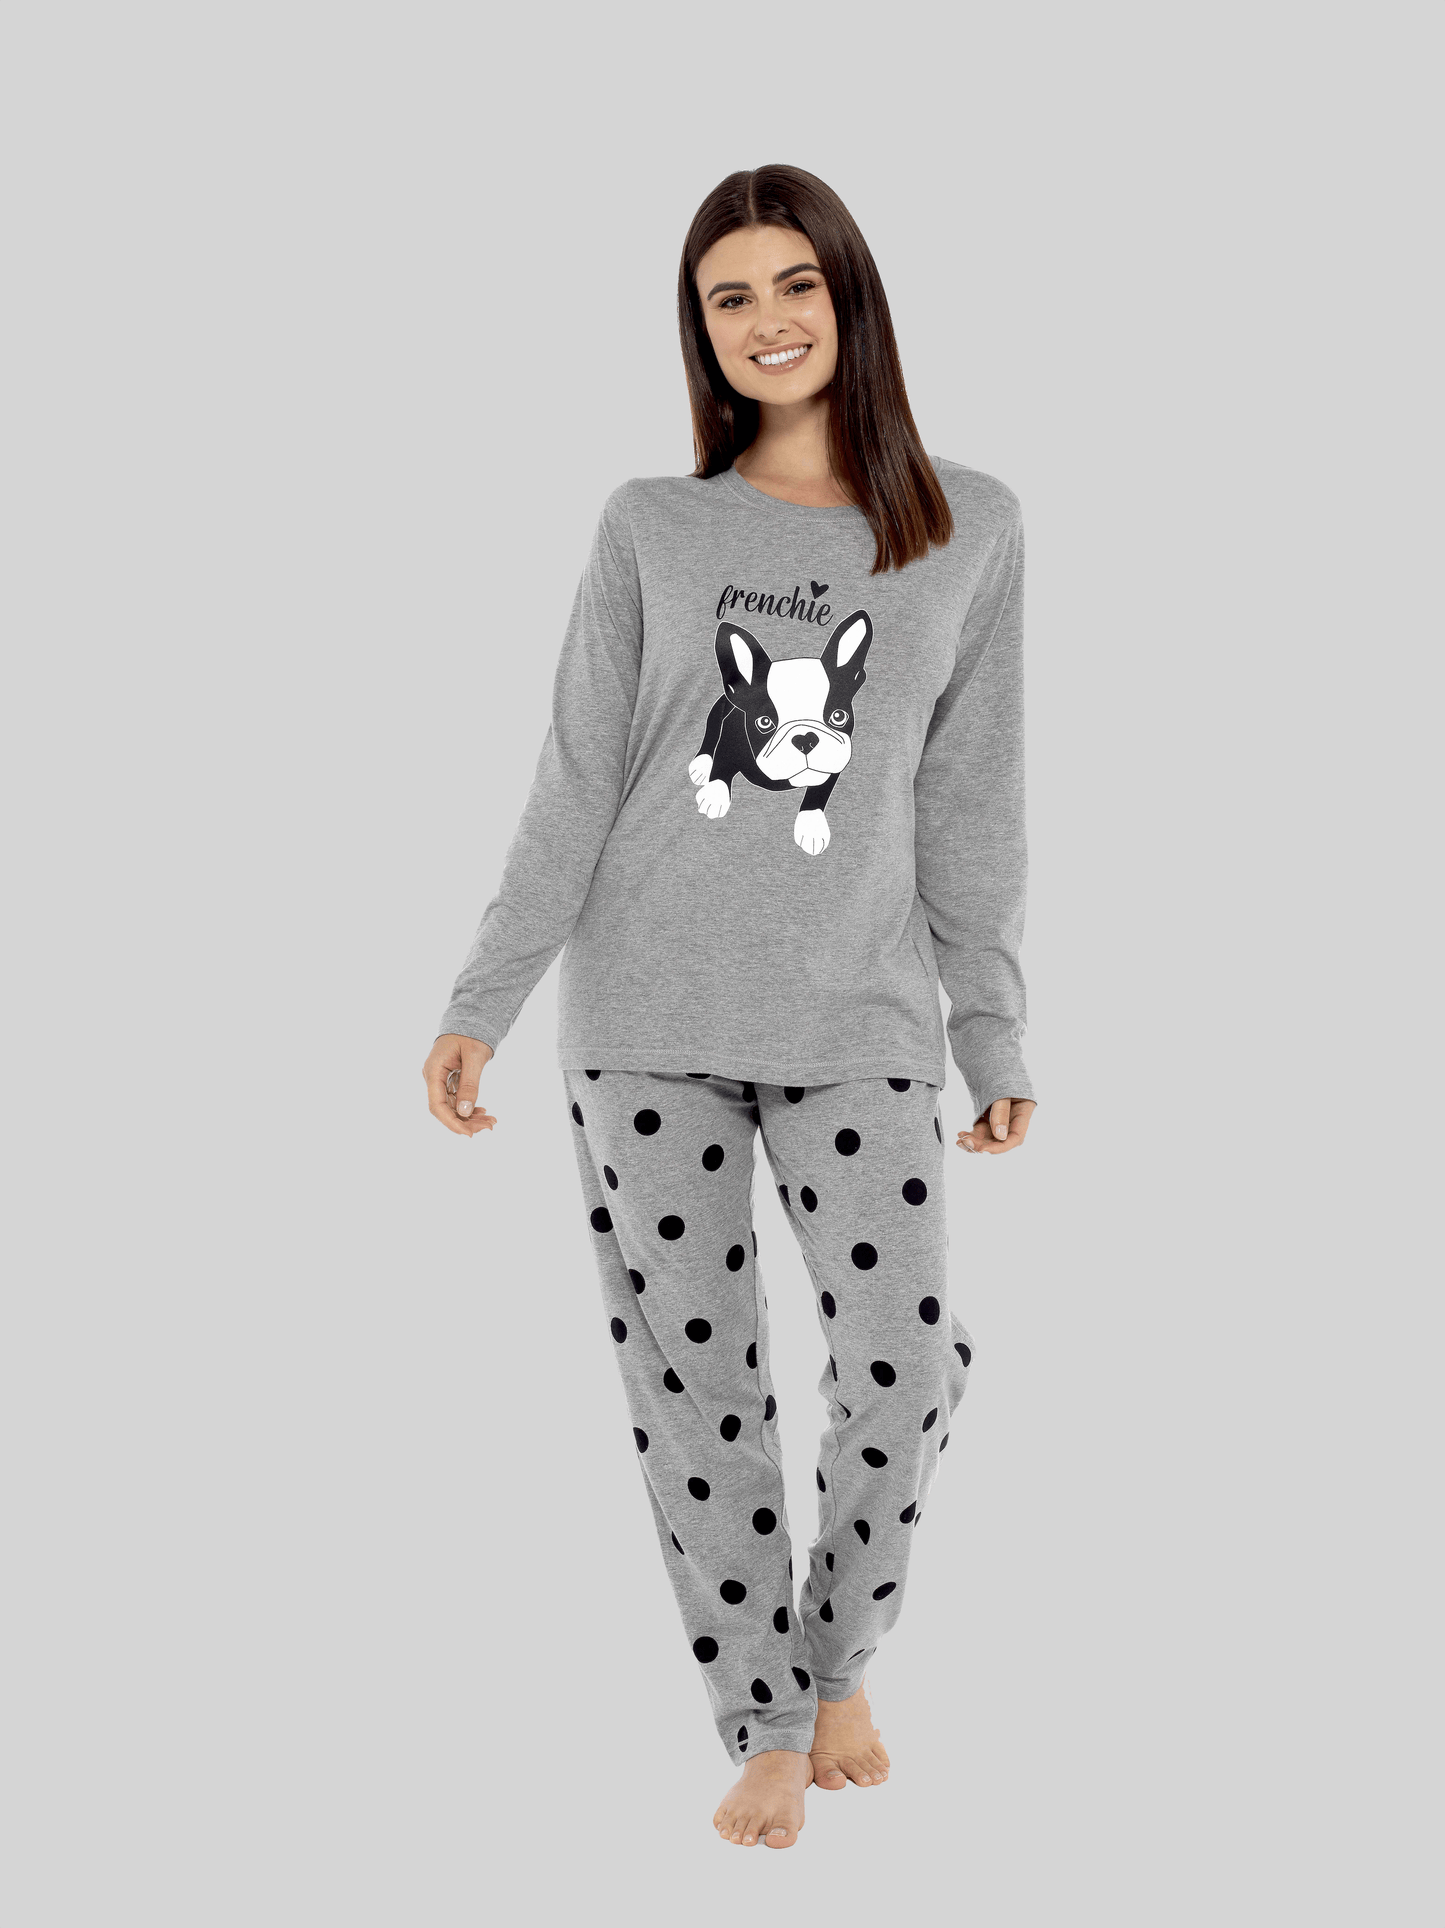 Frenchie Pugs Grey Cotton Pyjama Set With Polka Dot Pants SMALL | UK 8-10 Daisy Dreamer Pyjamas